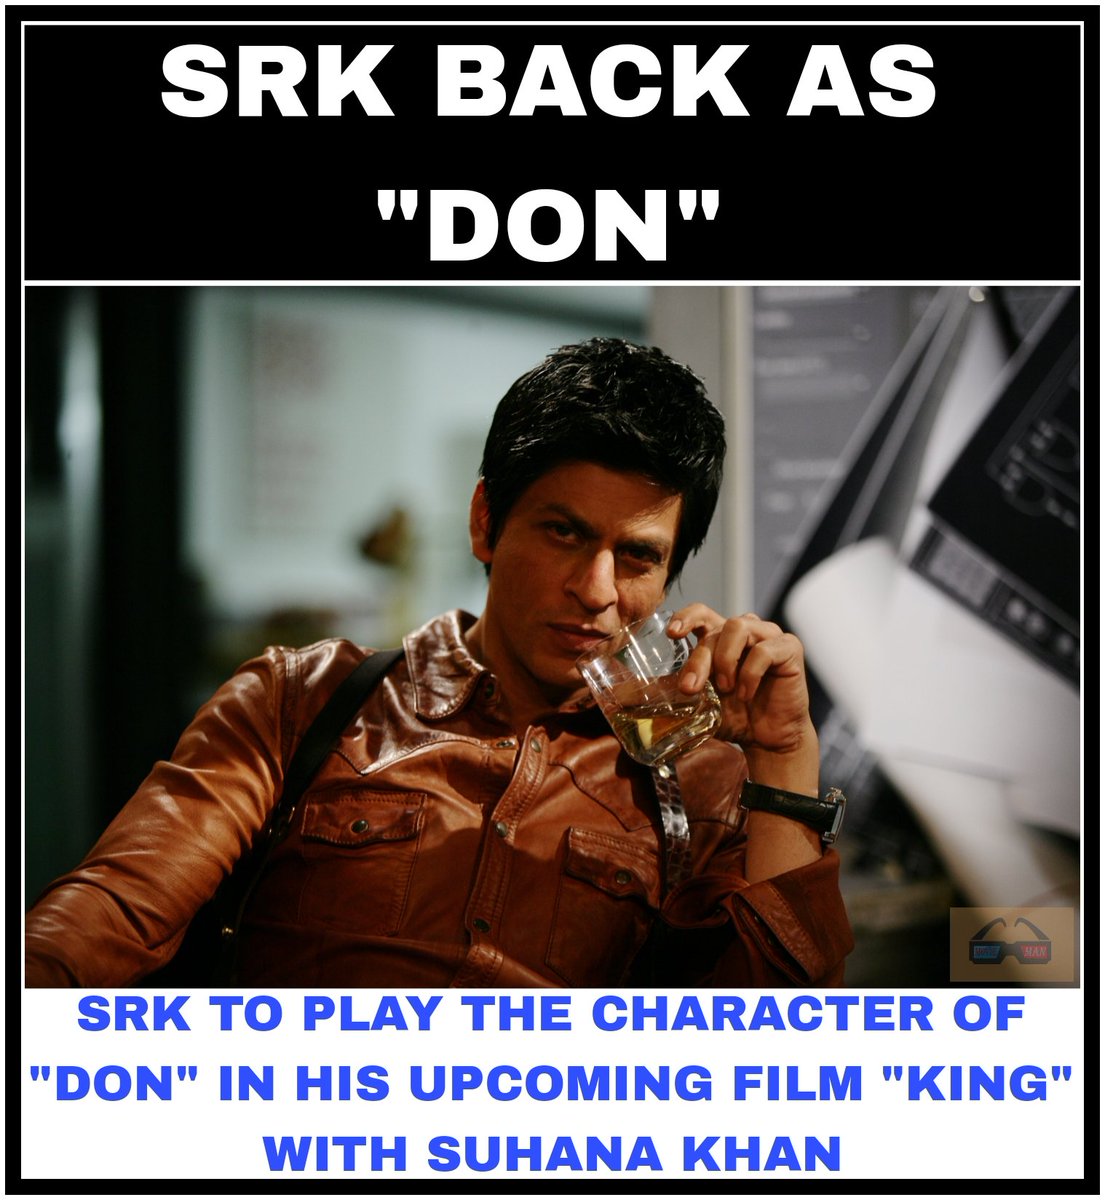 SRK AS DON 😎😎😎
.
.
#srk #shahrukhkhan #don #don3 #don2 #suhanakhan #theking #king #sujoyghosh #siddharthanand #redchilliesentertainment #moviemanblogger
.
.
@moviemanblogger